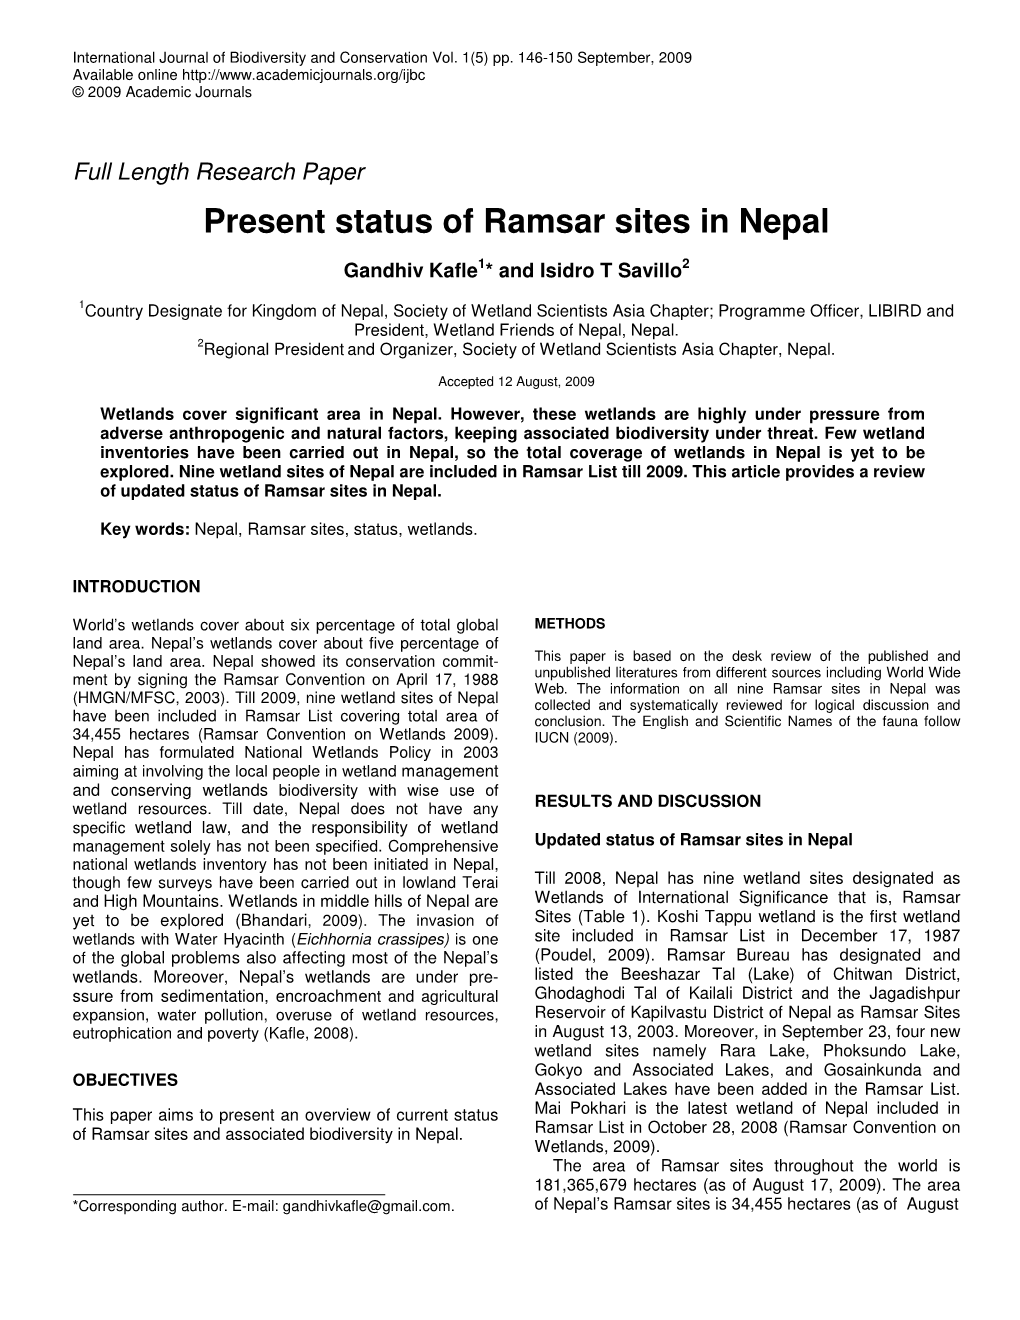 Present Status of Ramsar Sites in Nepal